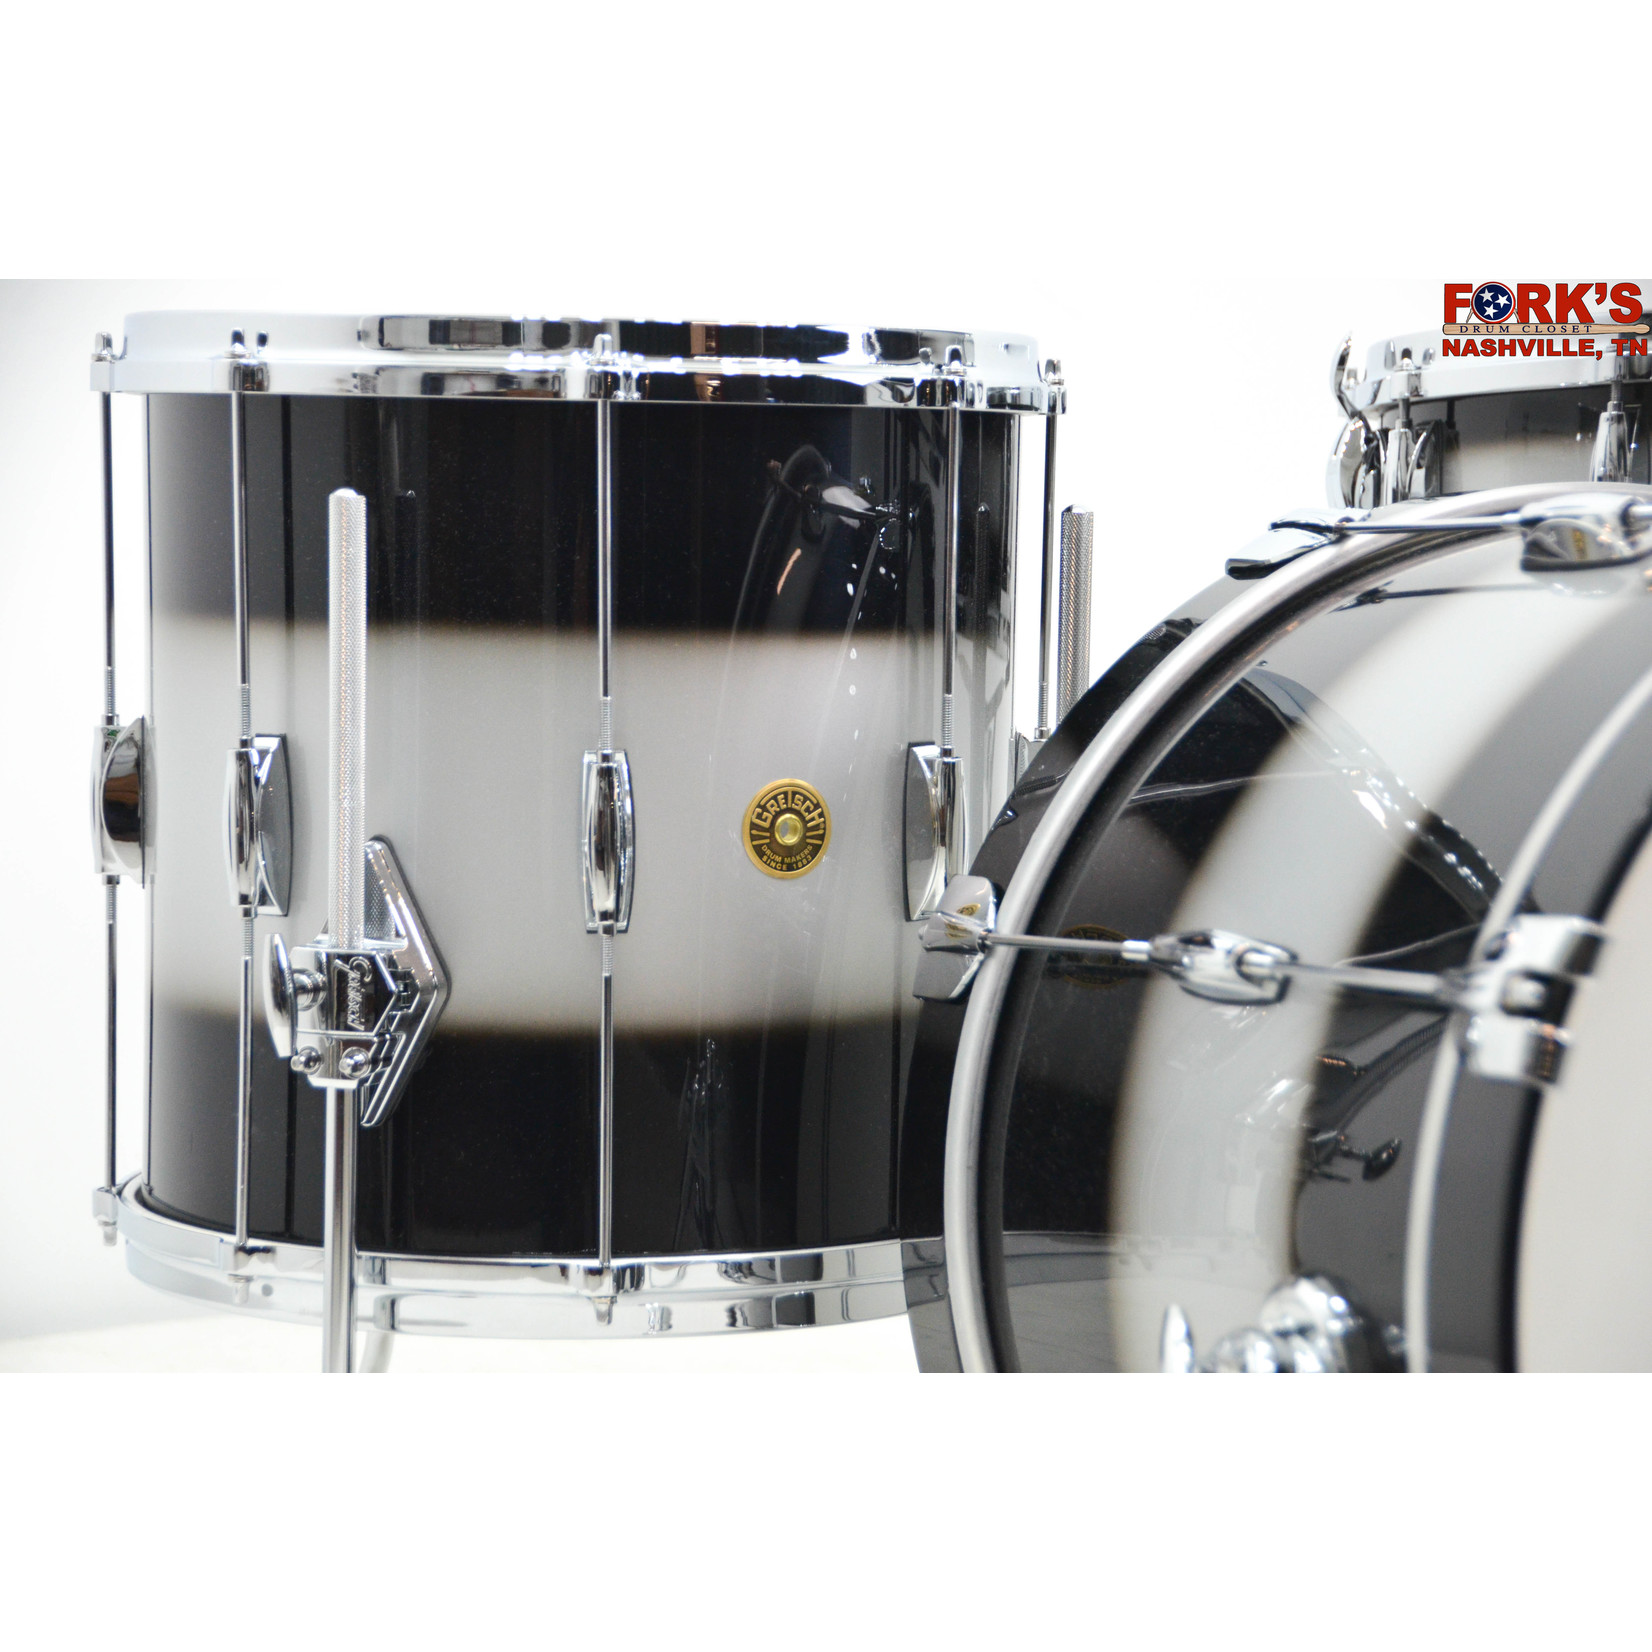 Gretsch Gretsch USA 4pc Drum Kit - "Black/Silver Duco Gloss"